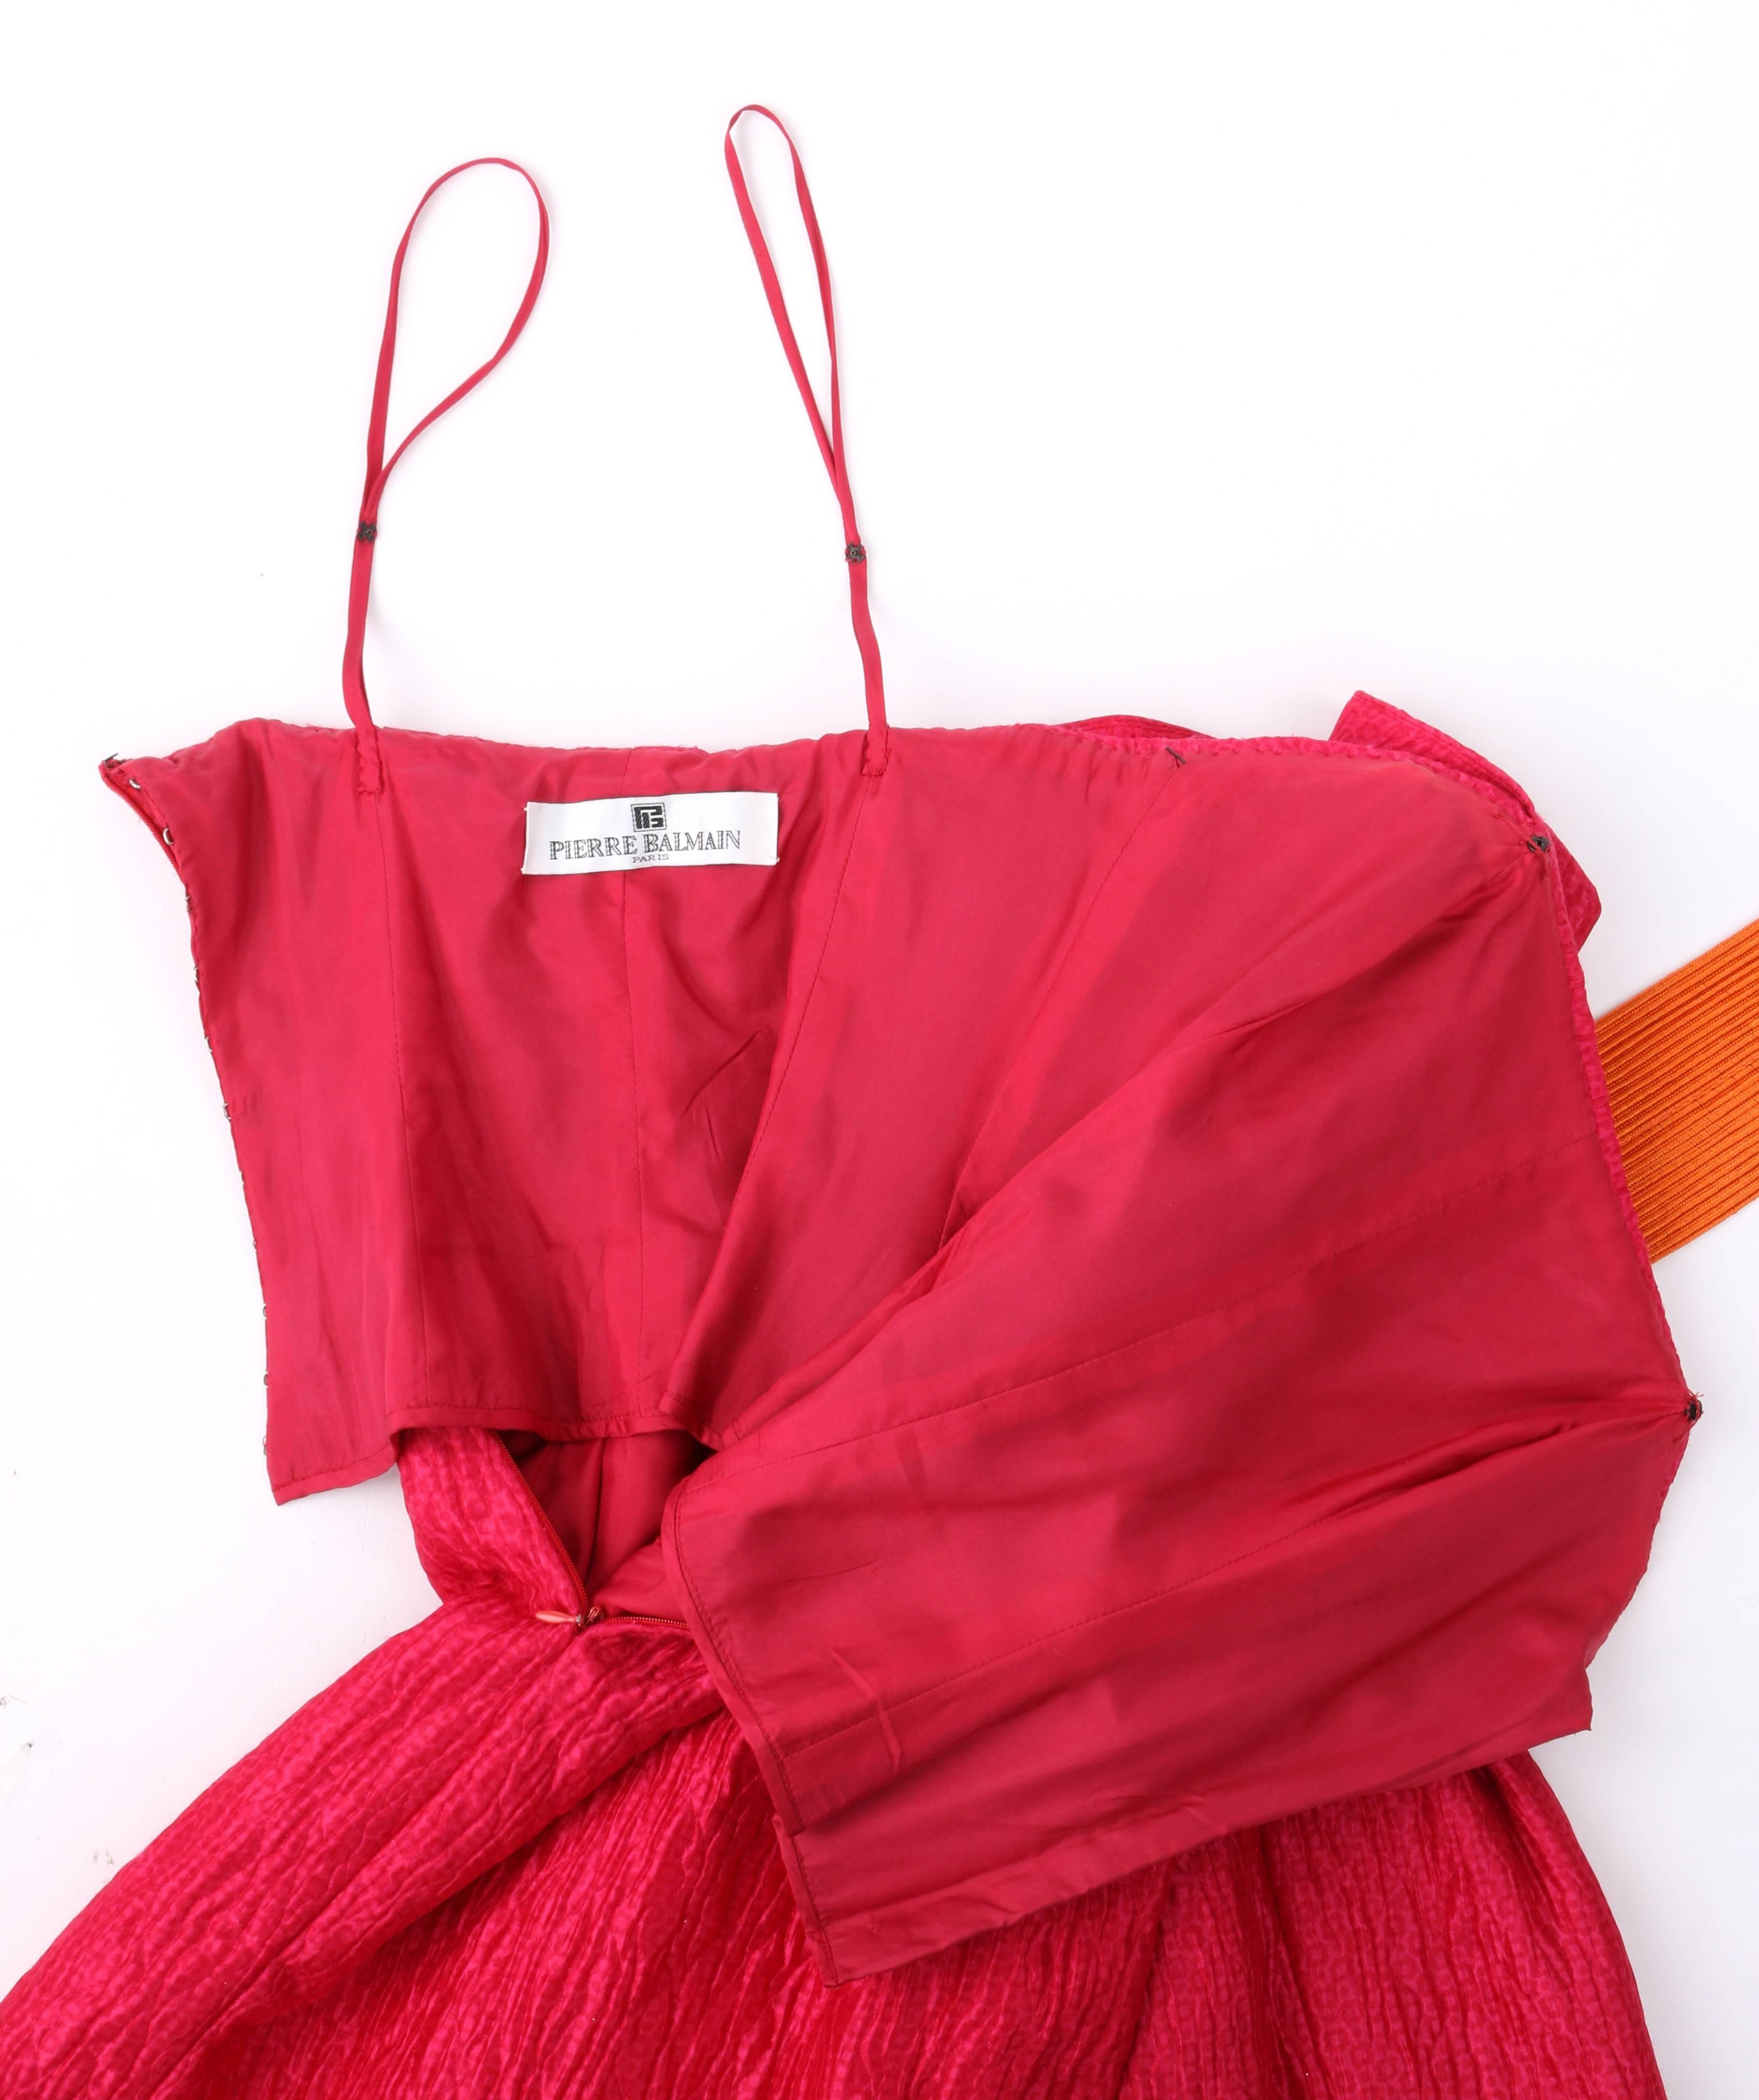 PIERRE BALMAIN c.1980's Bright Pink Silk Strapless Orange Belted Cocktail Dress For Sale 2